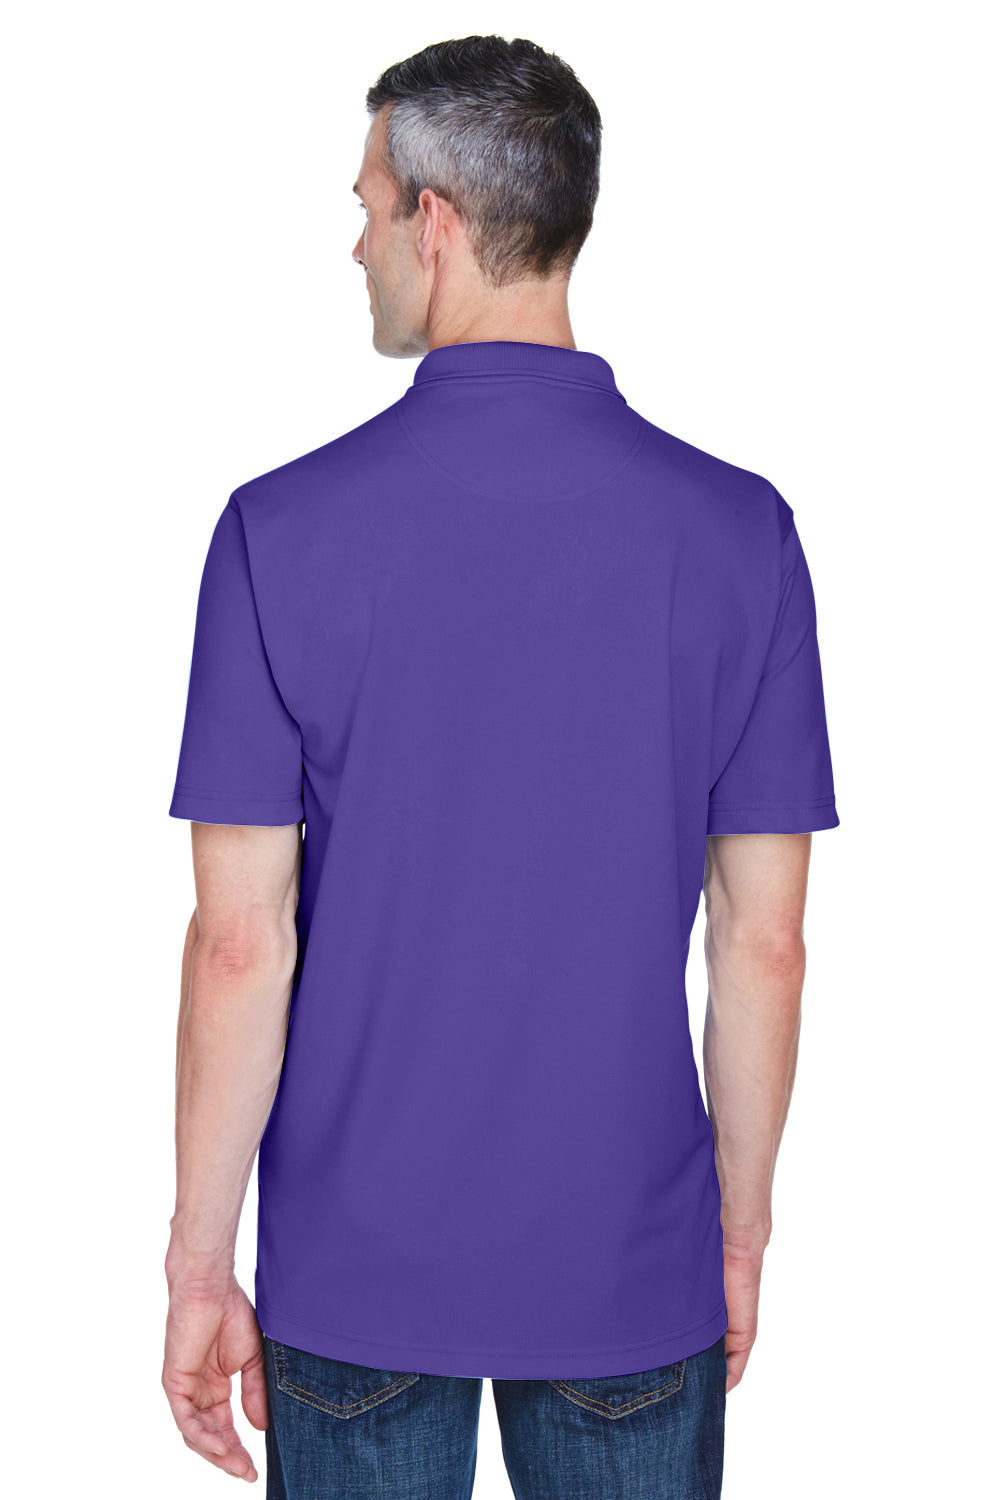 UltraClub 8445 Mens Cool & Dry Performance Moisture Wicking Short Sleeve Polo Shirt Purple Back